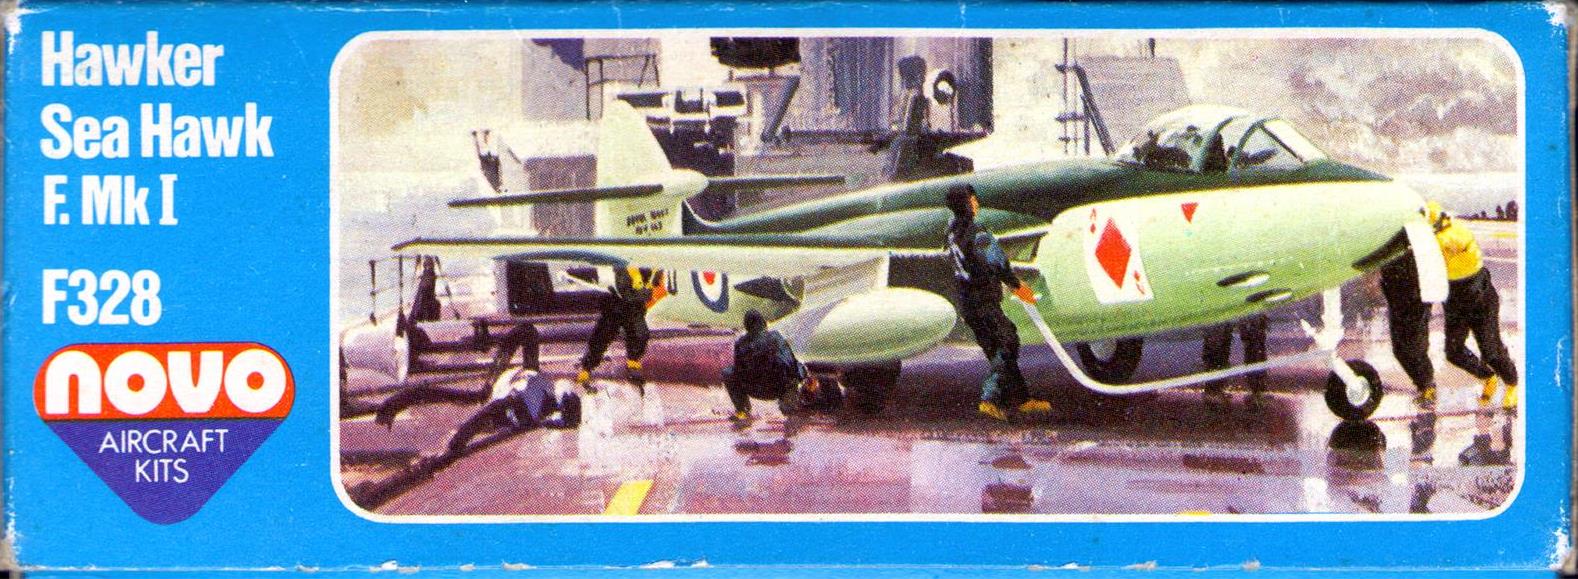  Малая сторона коробки NOVO Toys Ltd F328 Hawker Sea Hawk